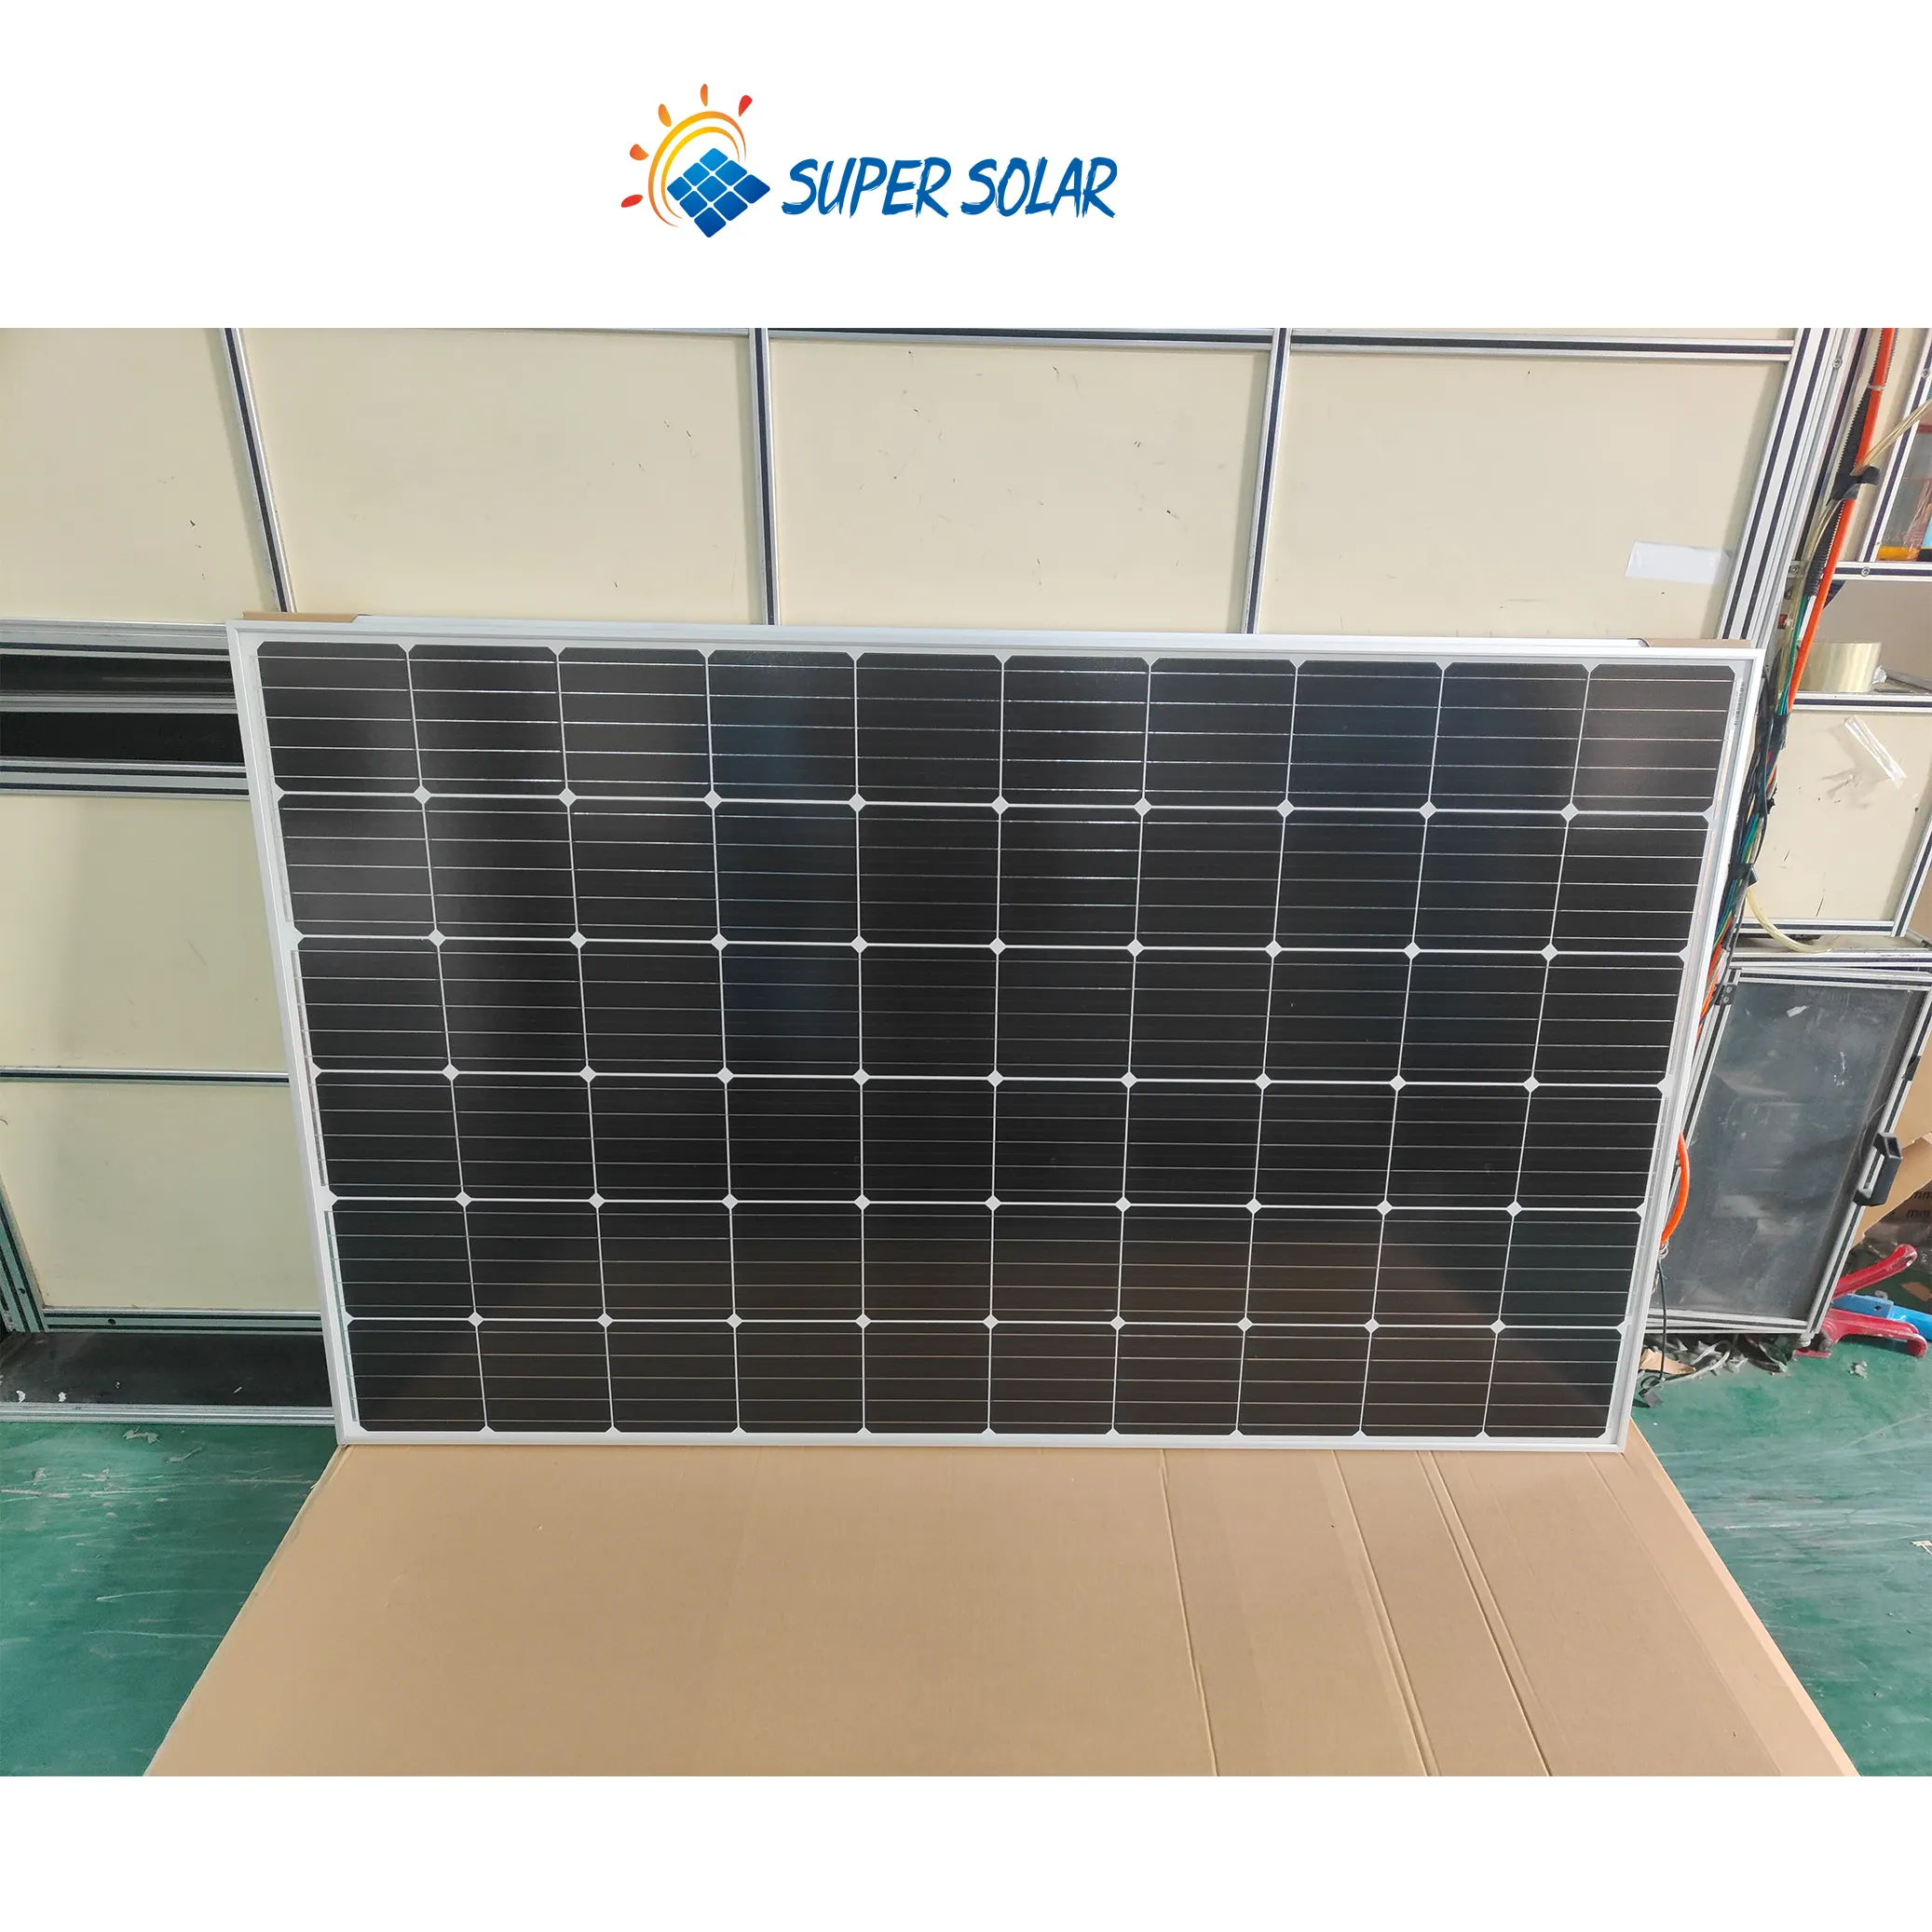 SuperS olar Factory Solarmodule Mono 270w für Solaranlage 60 Zellen mono kristallin